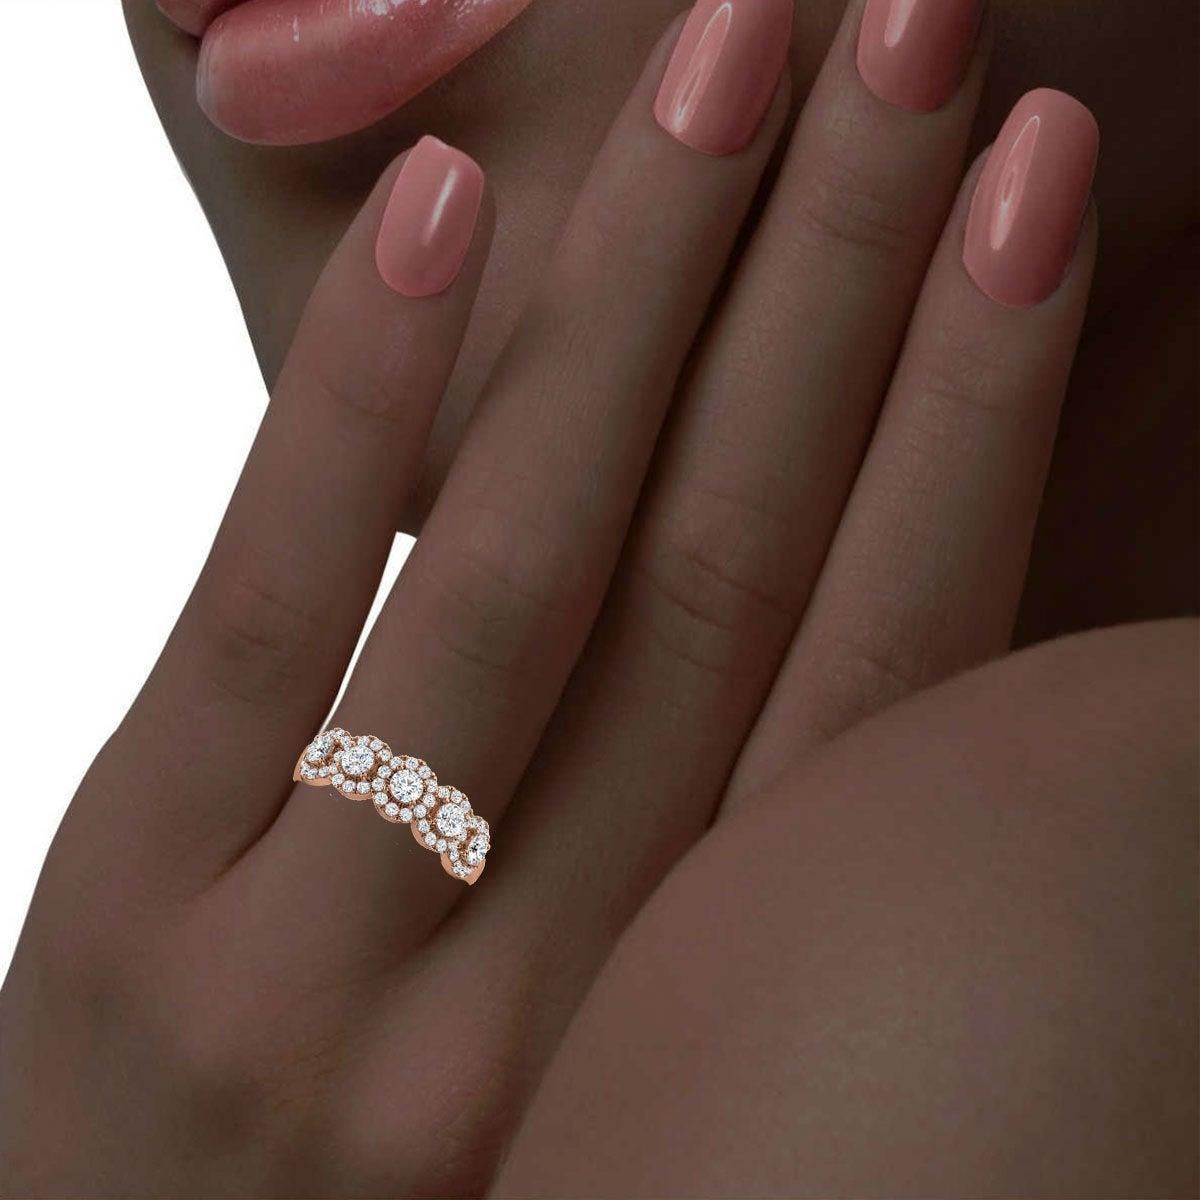 For Sale:  18k Rose Gold Petite Jenna Halo Diamond Ring '1/2 Ct. Tw' 4